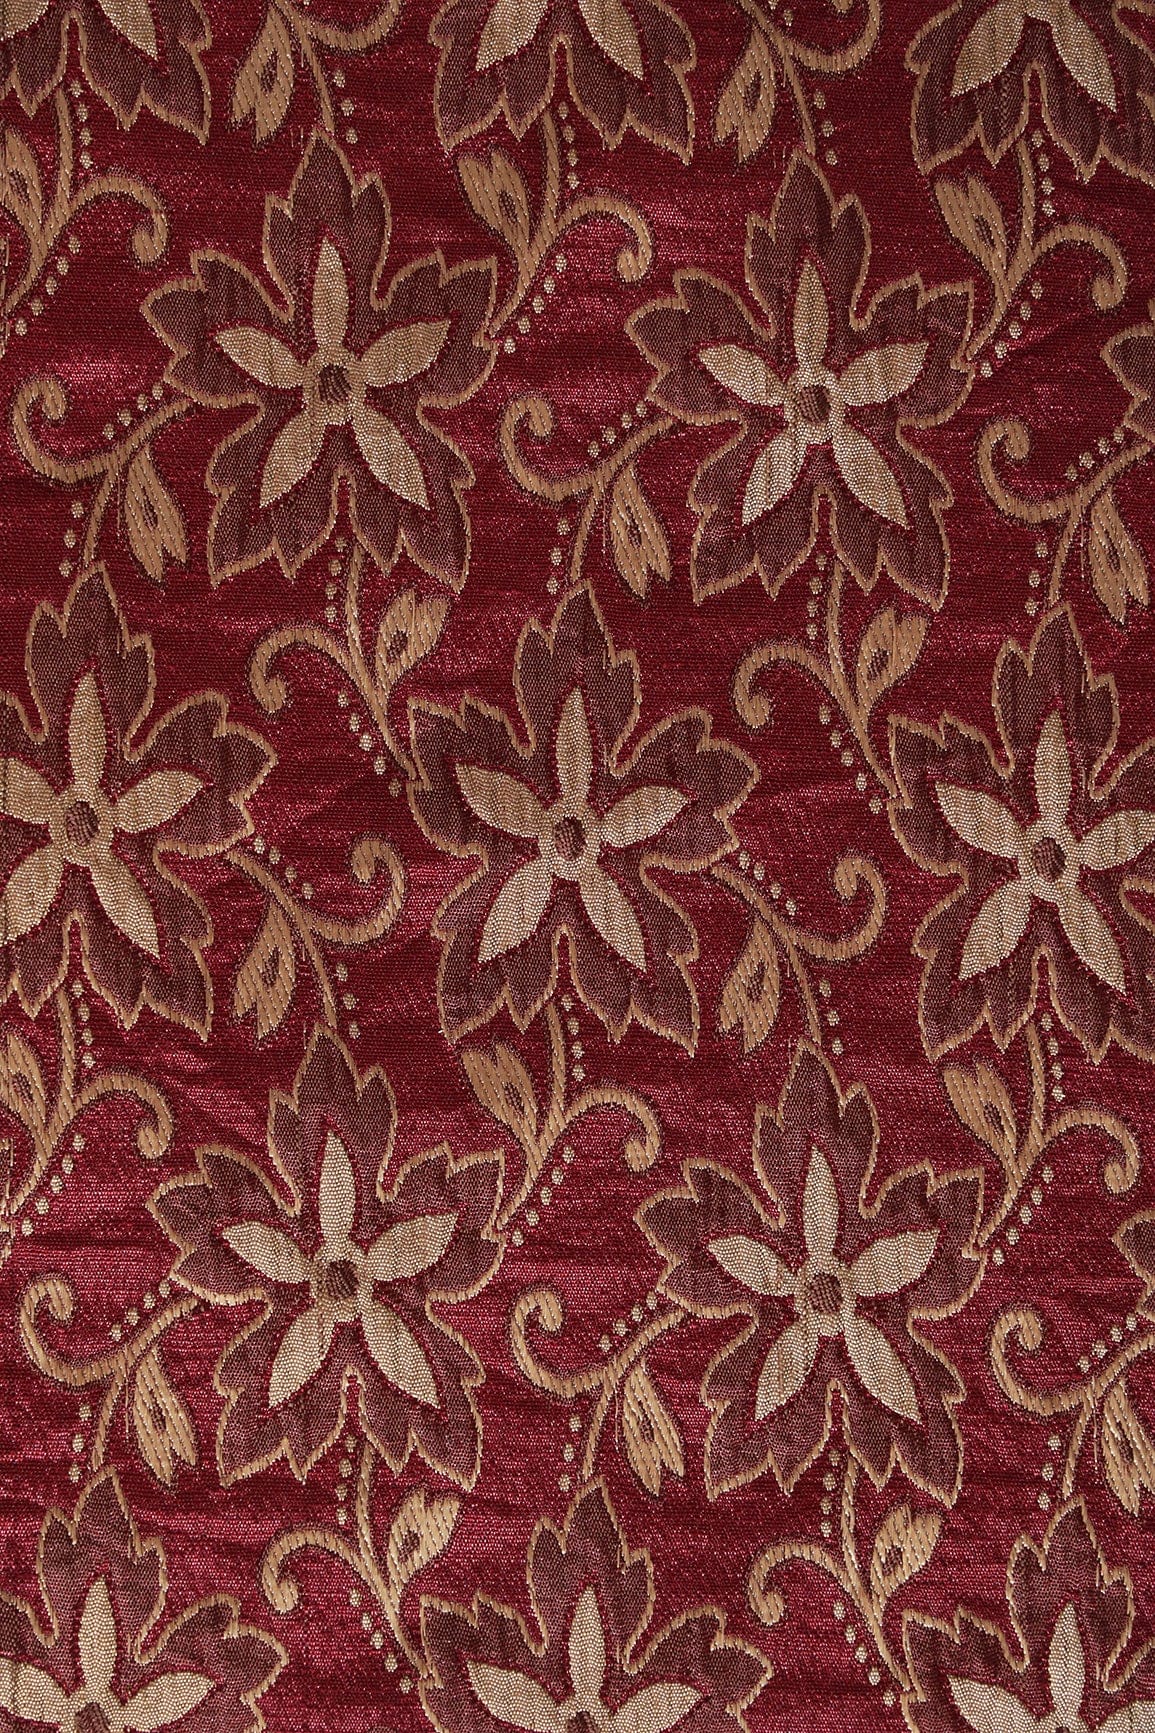 doeraa Banarasi Fabrics 4 Meter Cut Piece Of Maroon Floral Double Cloth Jacquard Banarasi Fabric